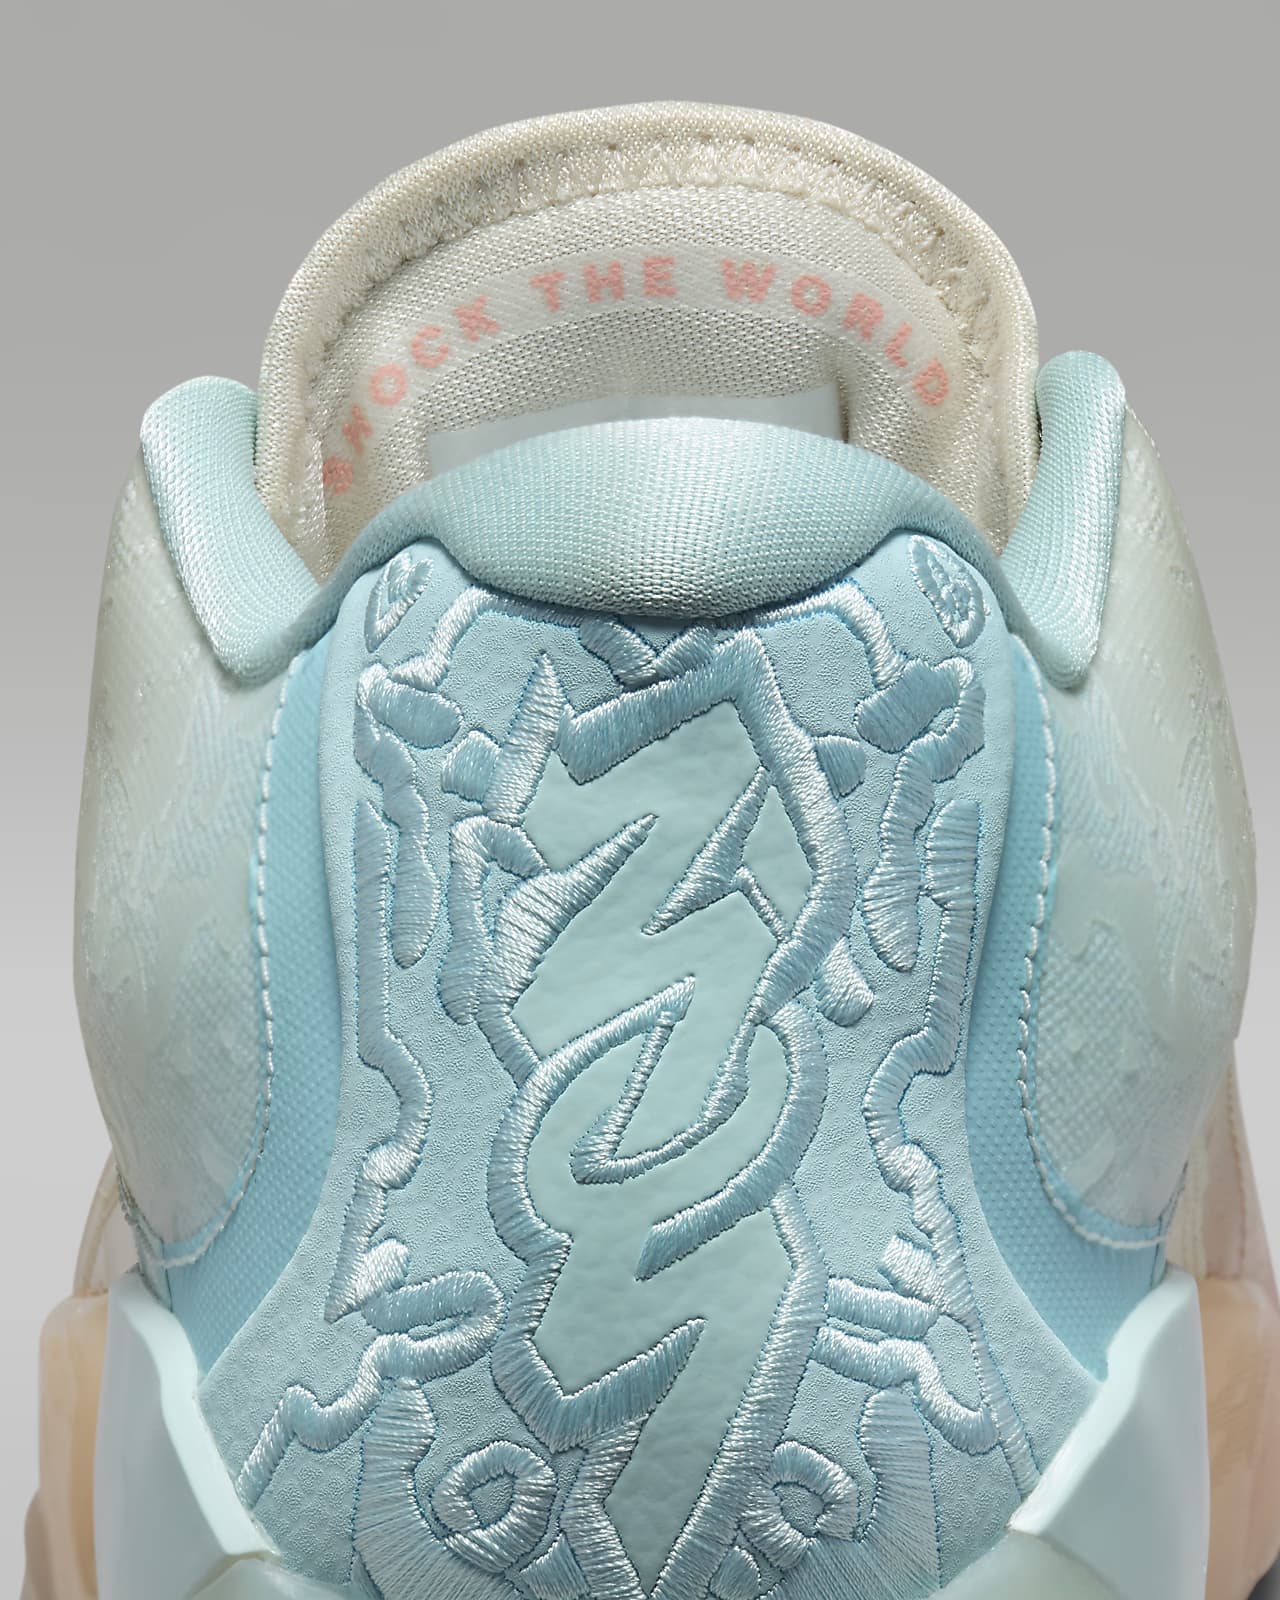 Zion 3 'Rising' PF Basketball Shoes. Nike SG